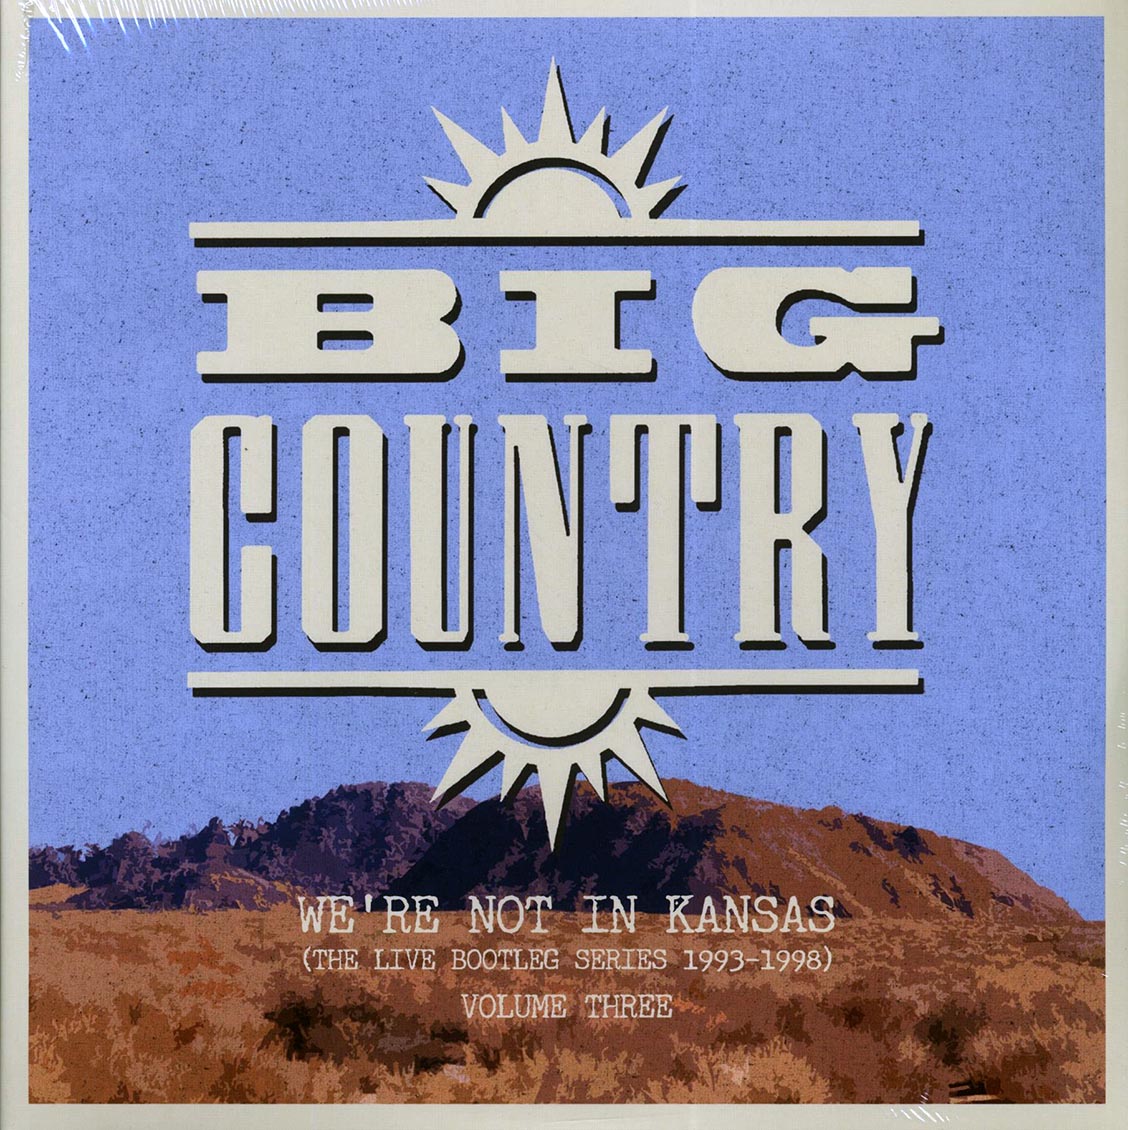 Big Country - We're Not In Kansas: The Live Bootleg Series 1993-1998 Volume 3 (ltd. ed.) (2xLP) - Vinyl LP